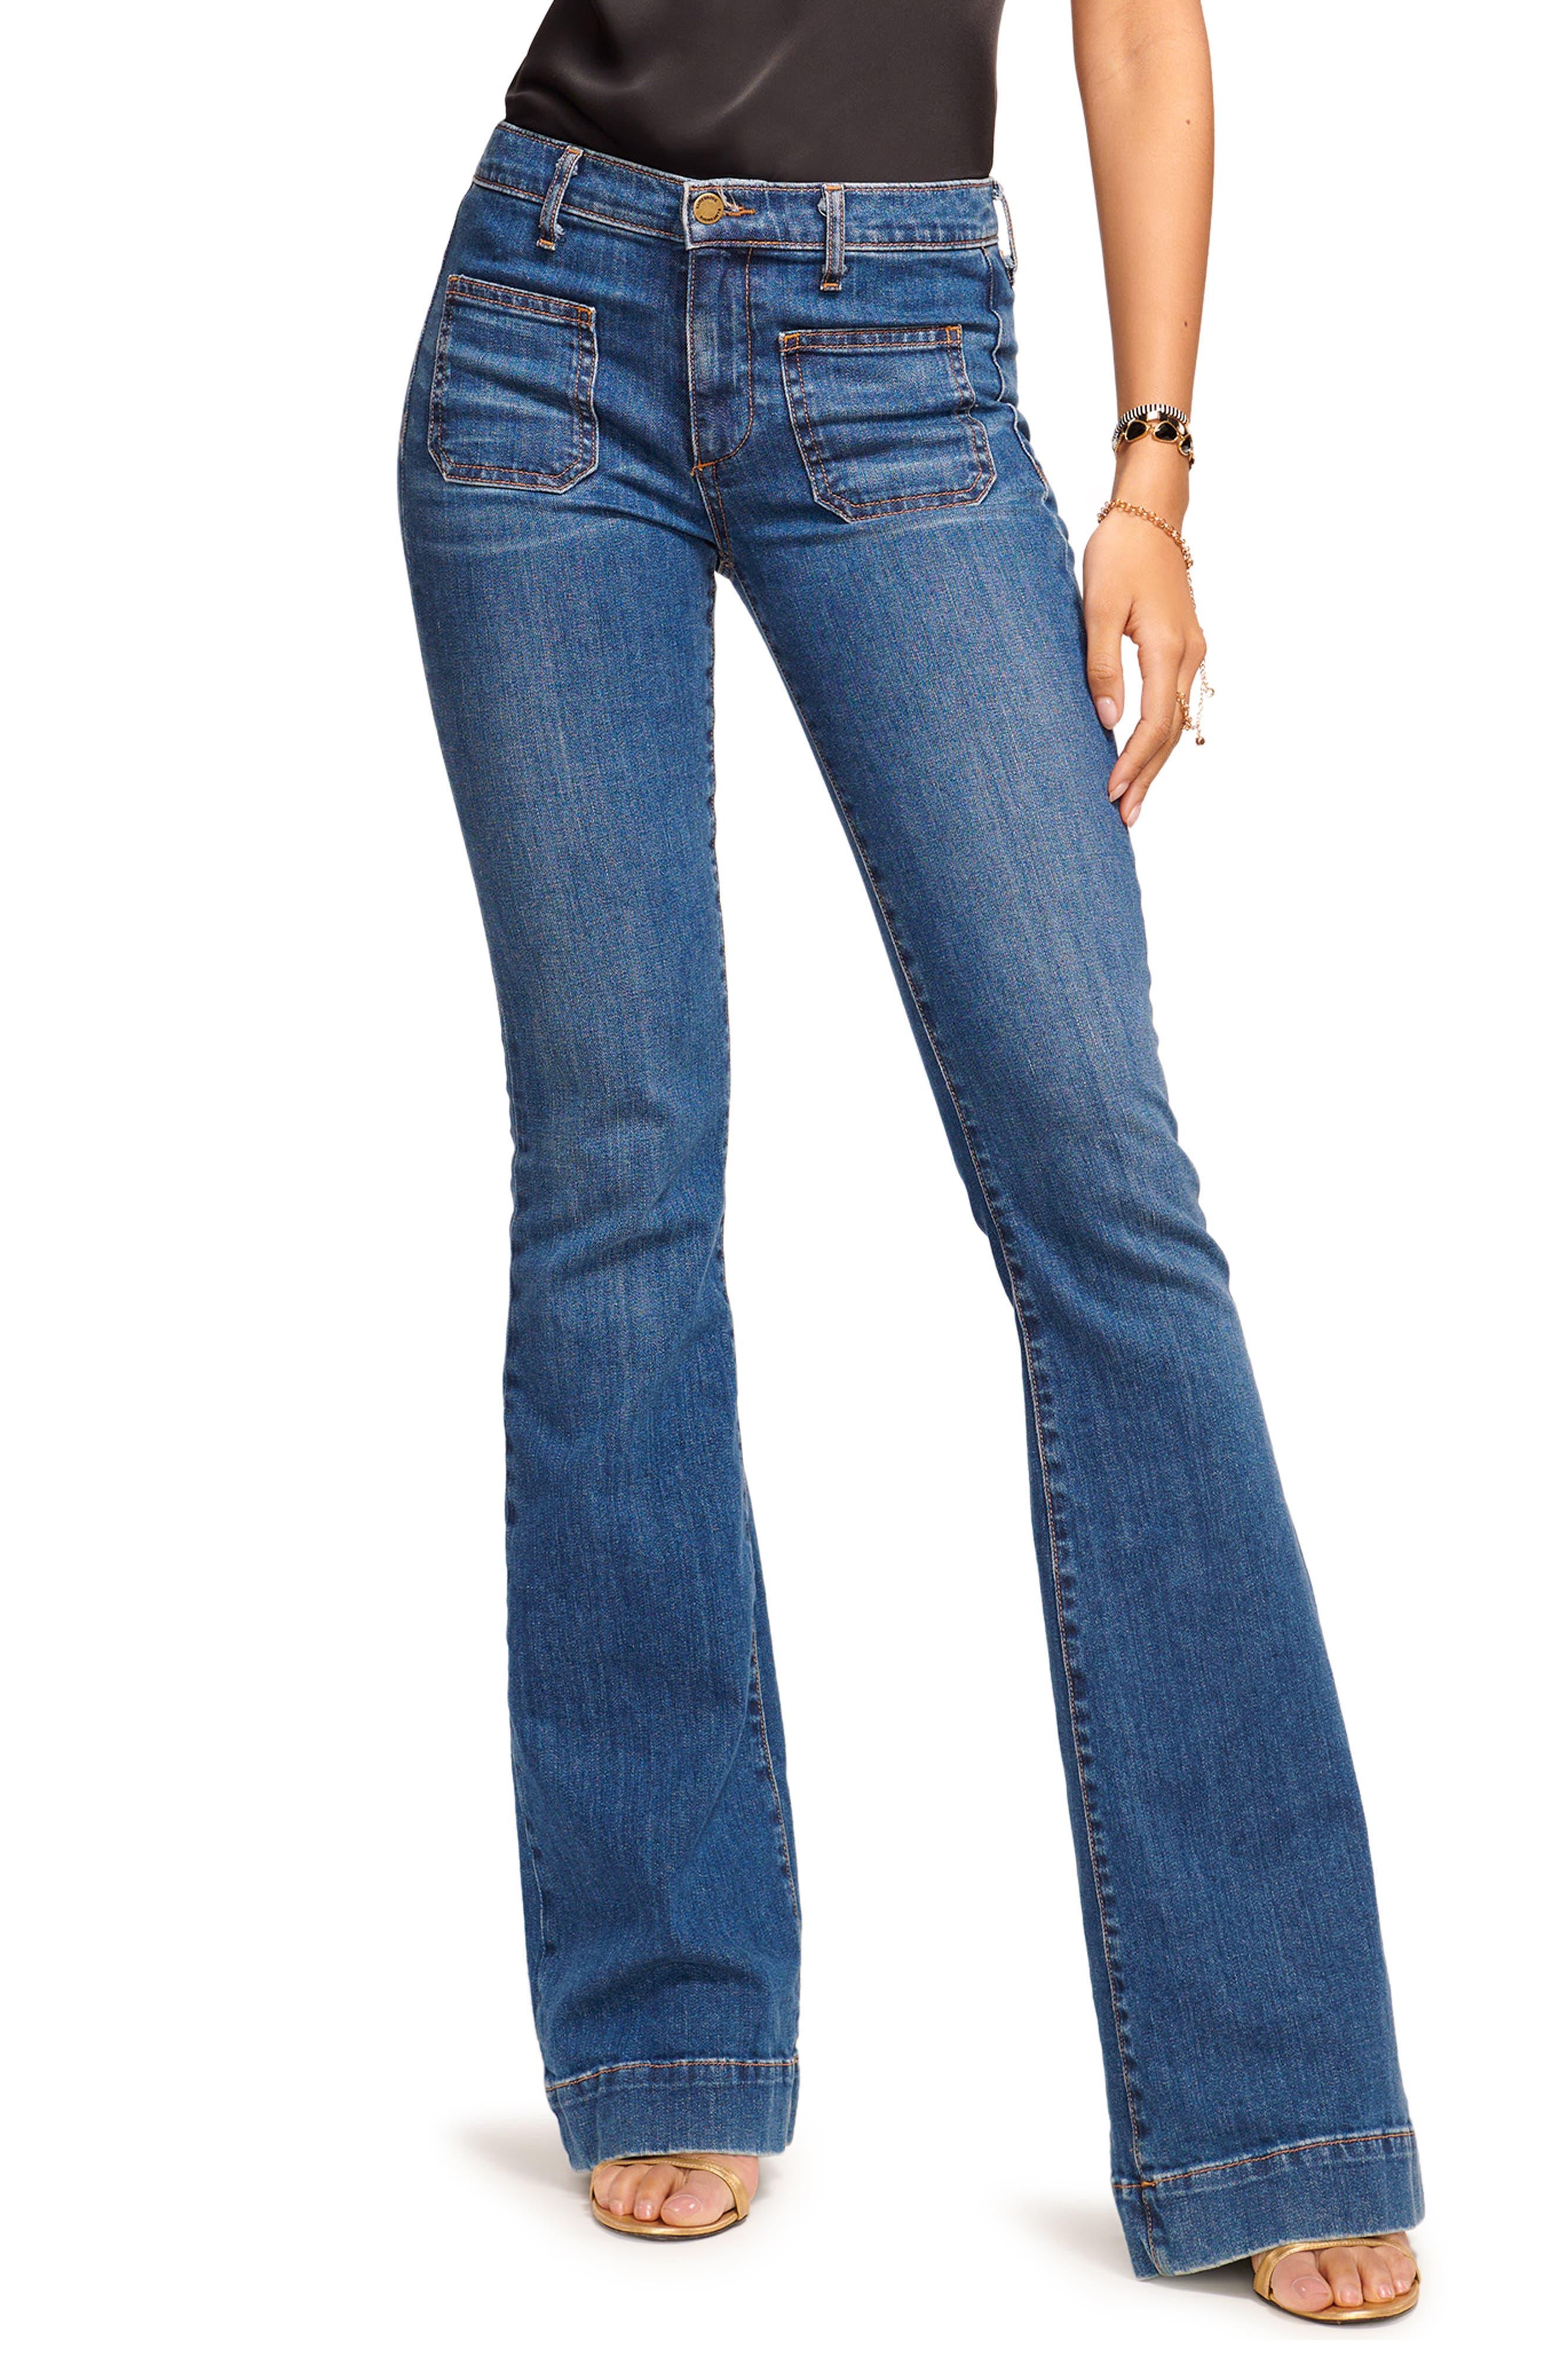 Ramy Brook Women's Mase Sailor Flare Jeans - Medium Wash - Size 25